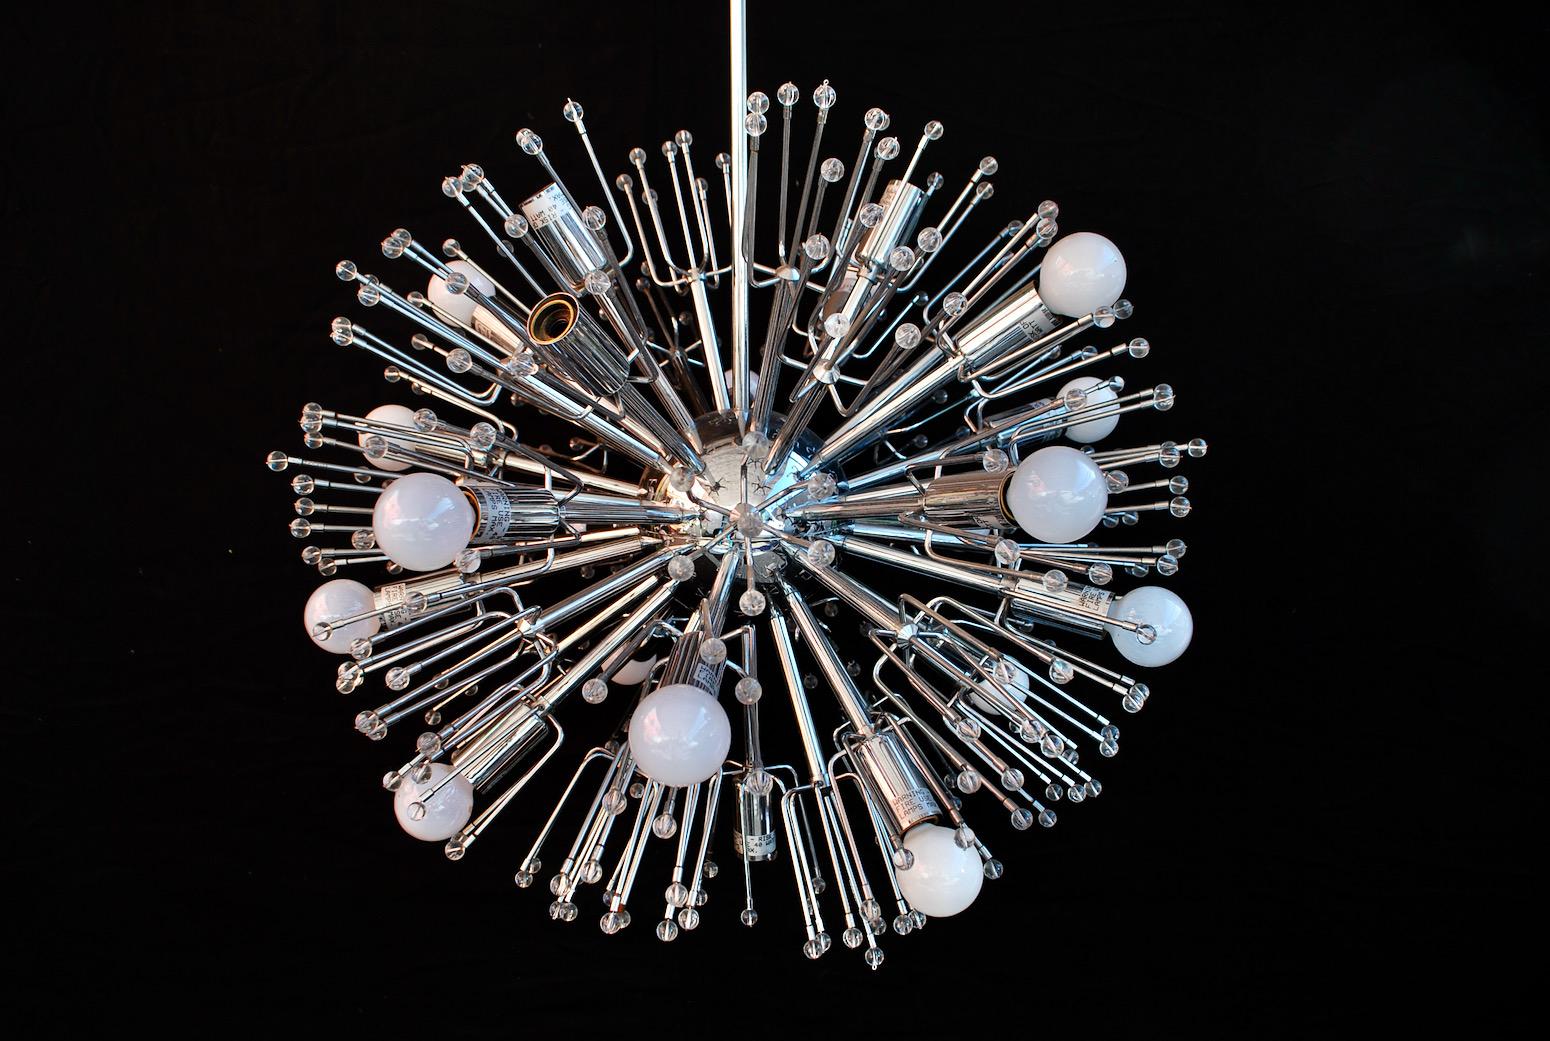 A beautiful and sexy sputnik light design by Emil Stejnar.